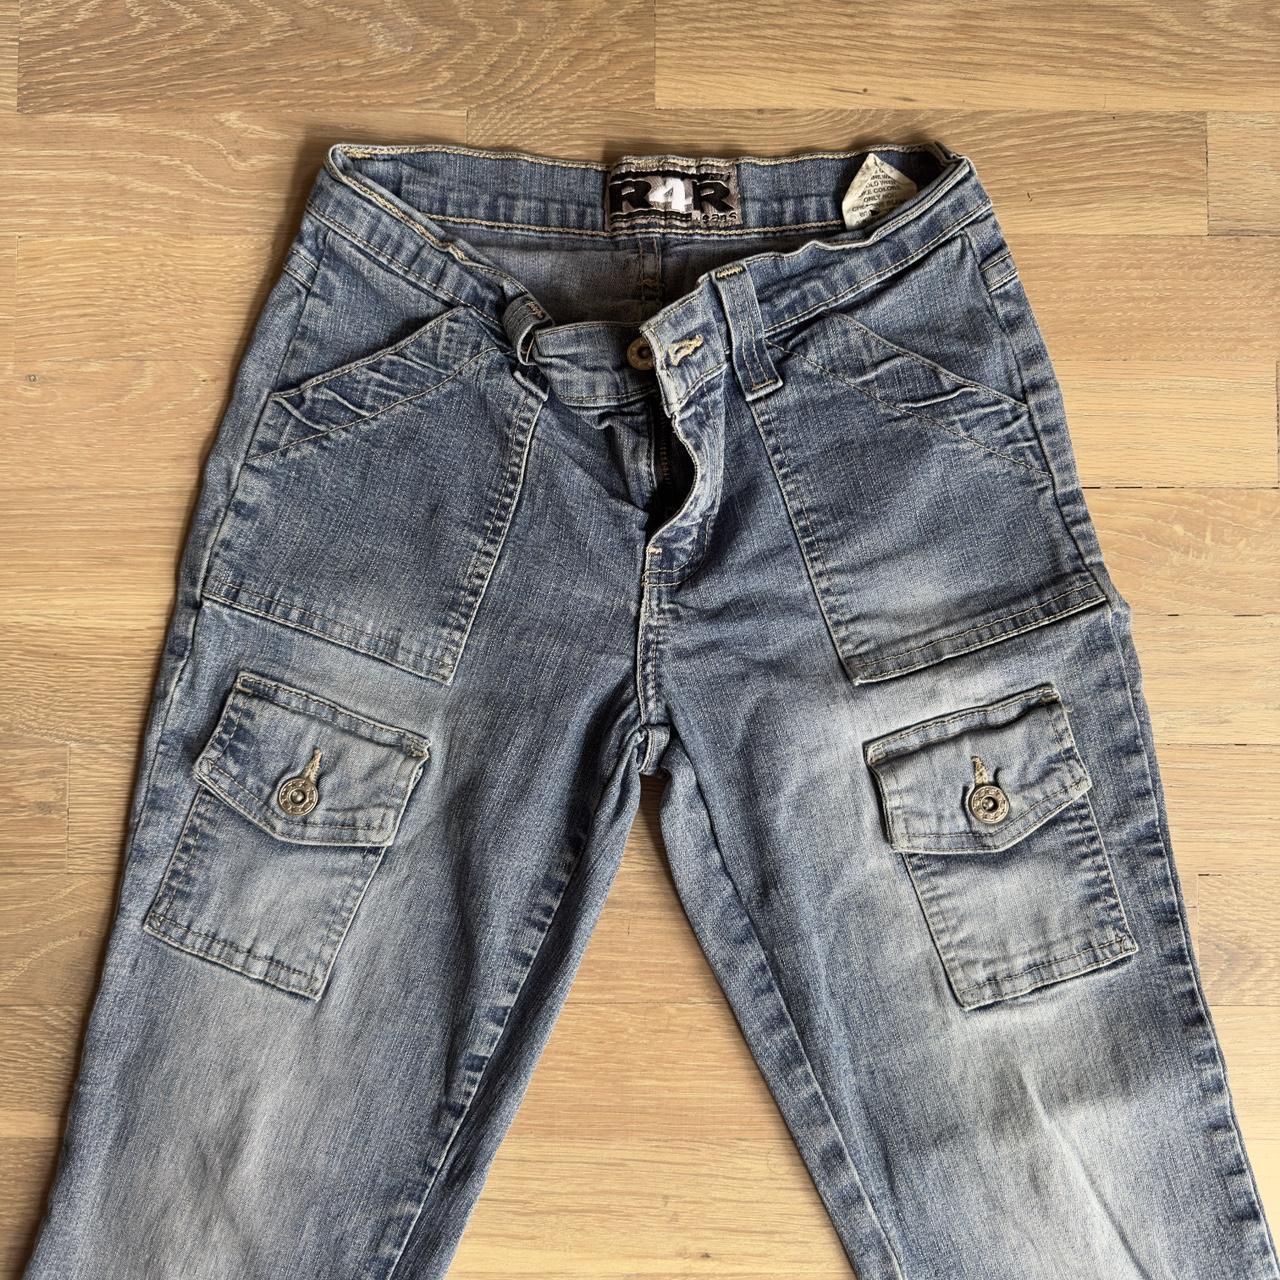 R4R Cargo Jeans - not angels brand #flarejeans... - Depop